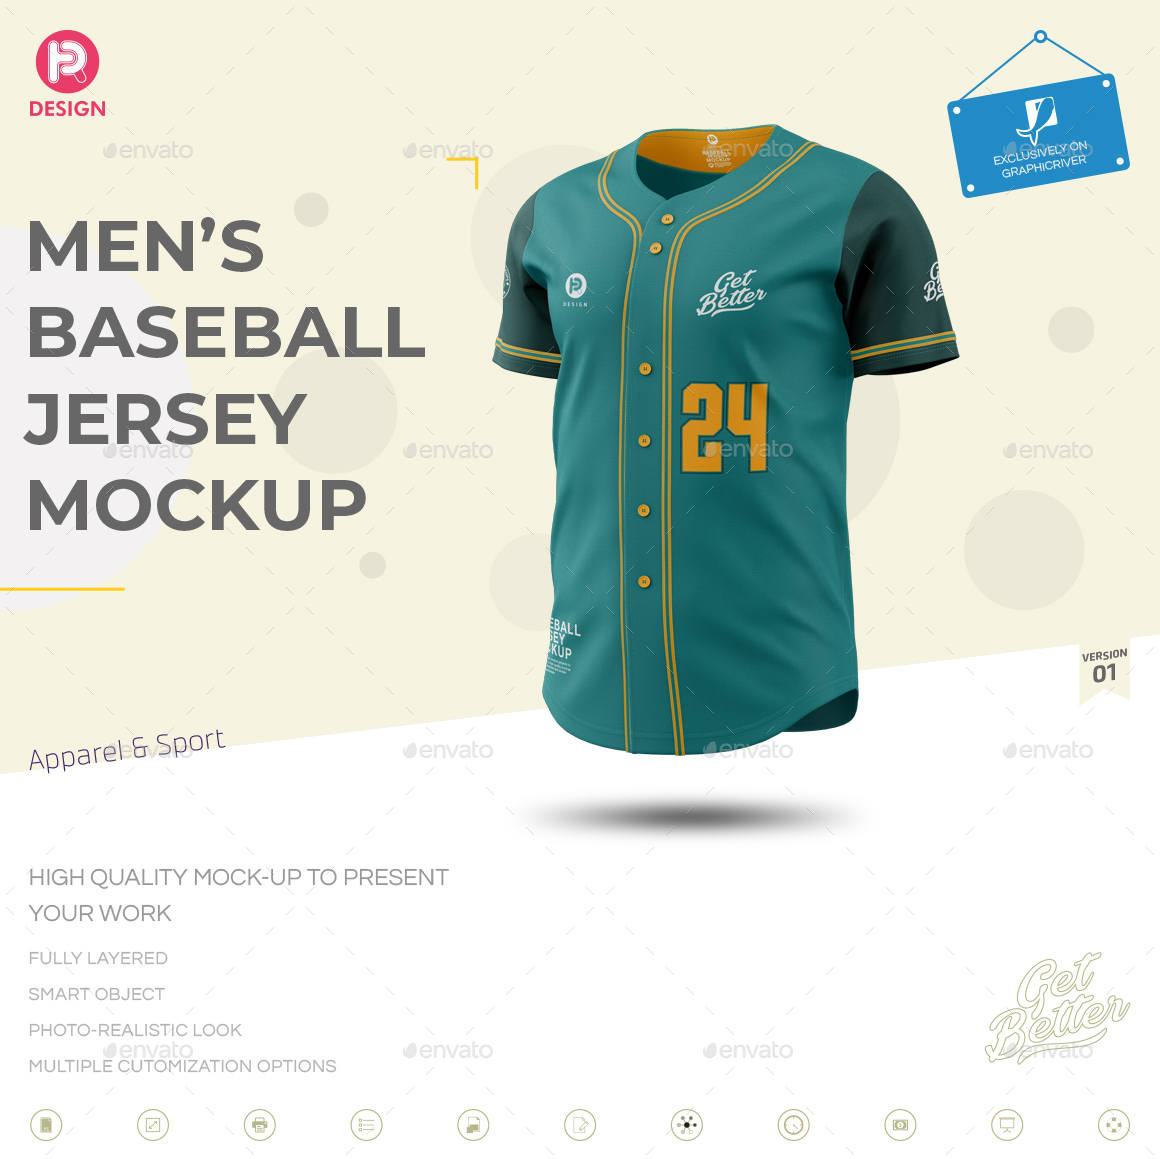 Men's Baseball Jersey Mockup V1 by TRDesignme